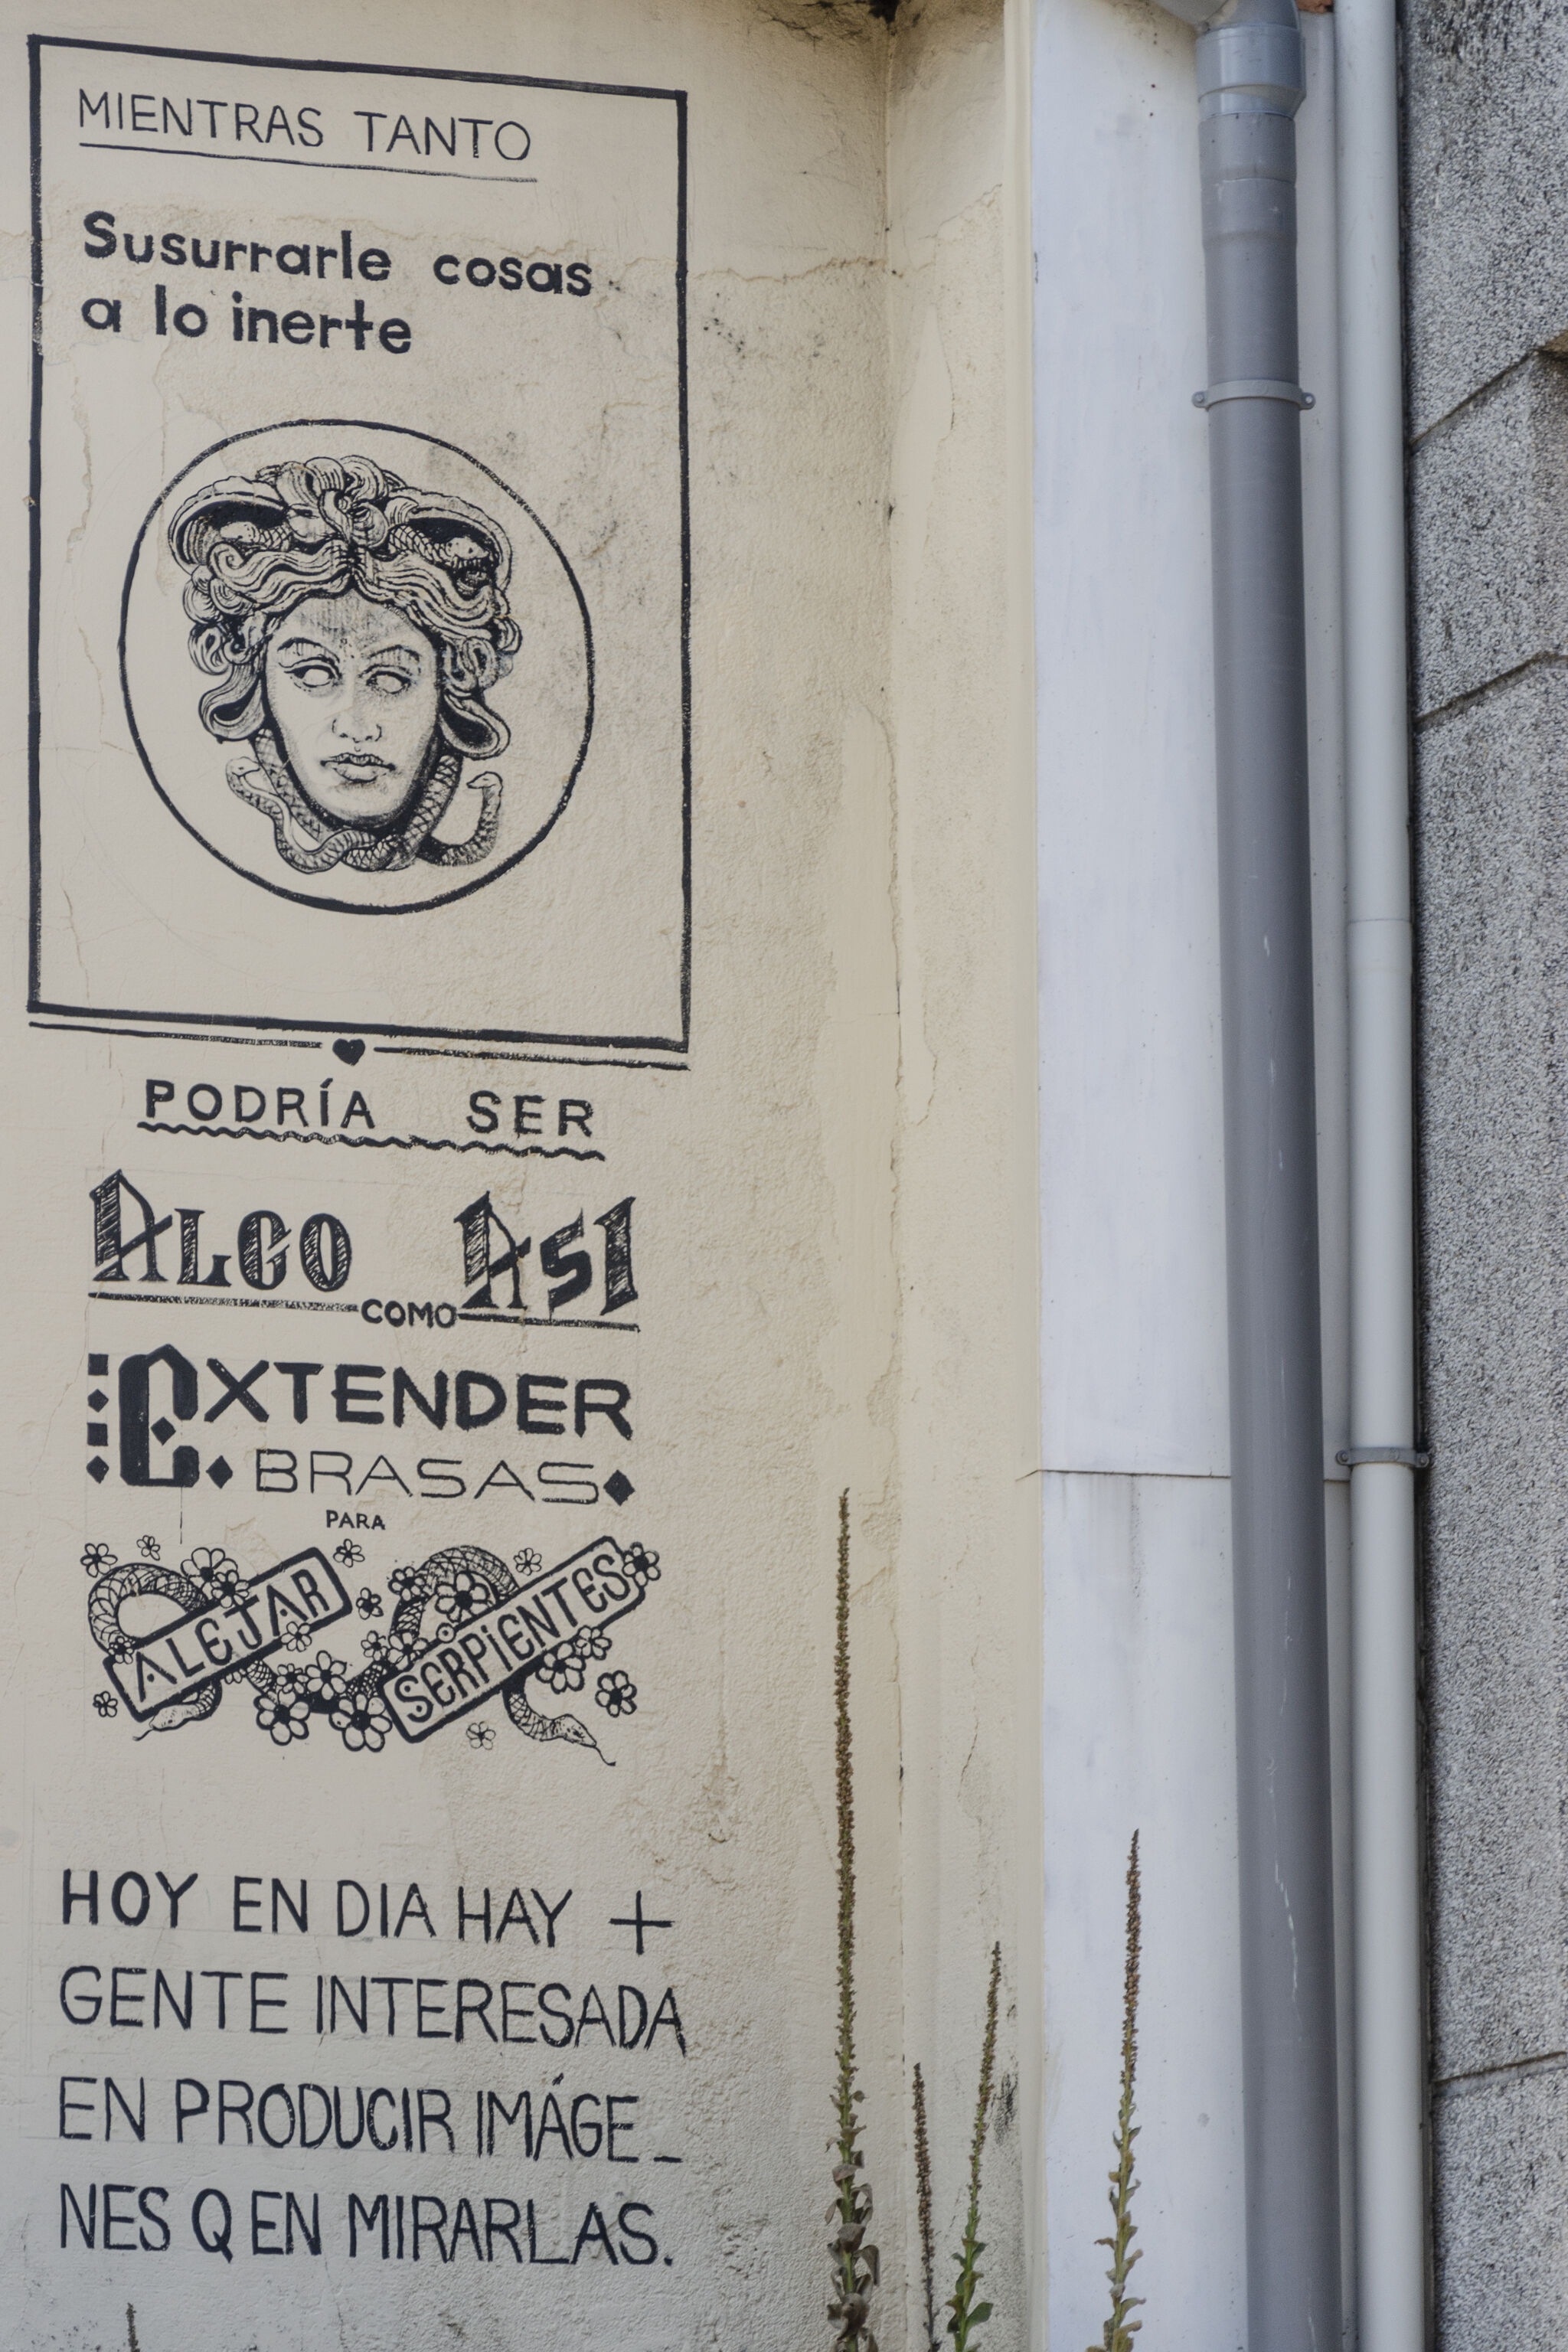 DANIEL MUÑOZ "SAN"&mdash;Wall by DANIEL MUÑOZ "SAN" for DESORDES CREATIVAS 2019 (Ordes, Galicia-Spain)